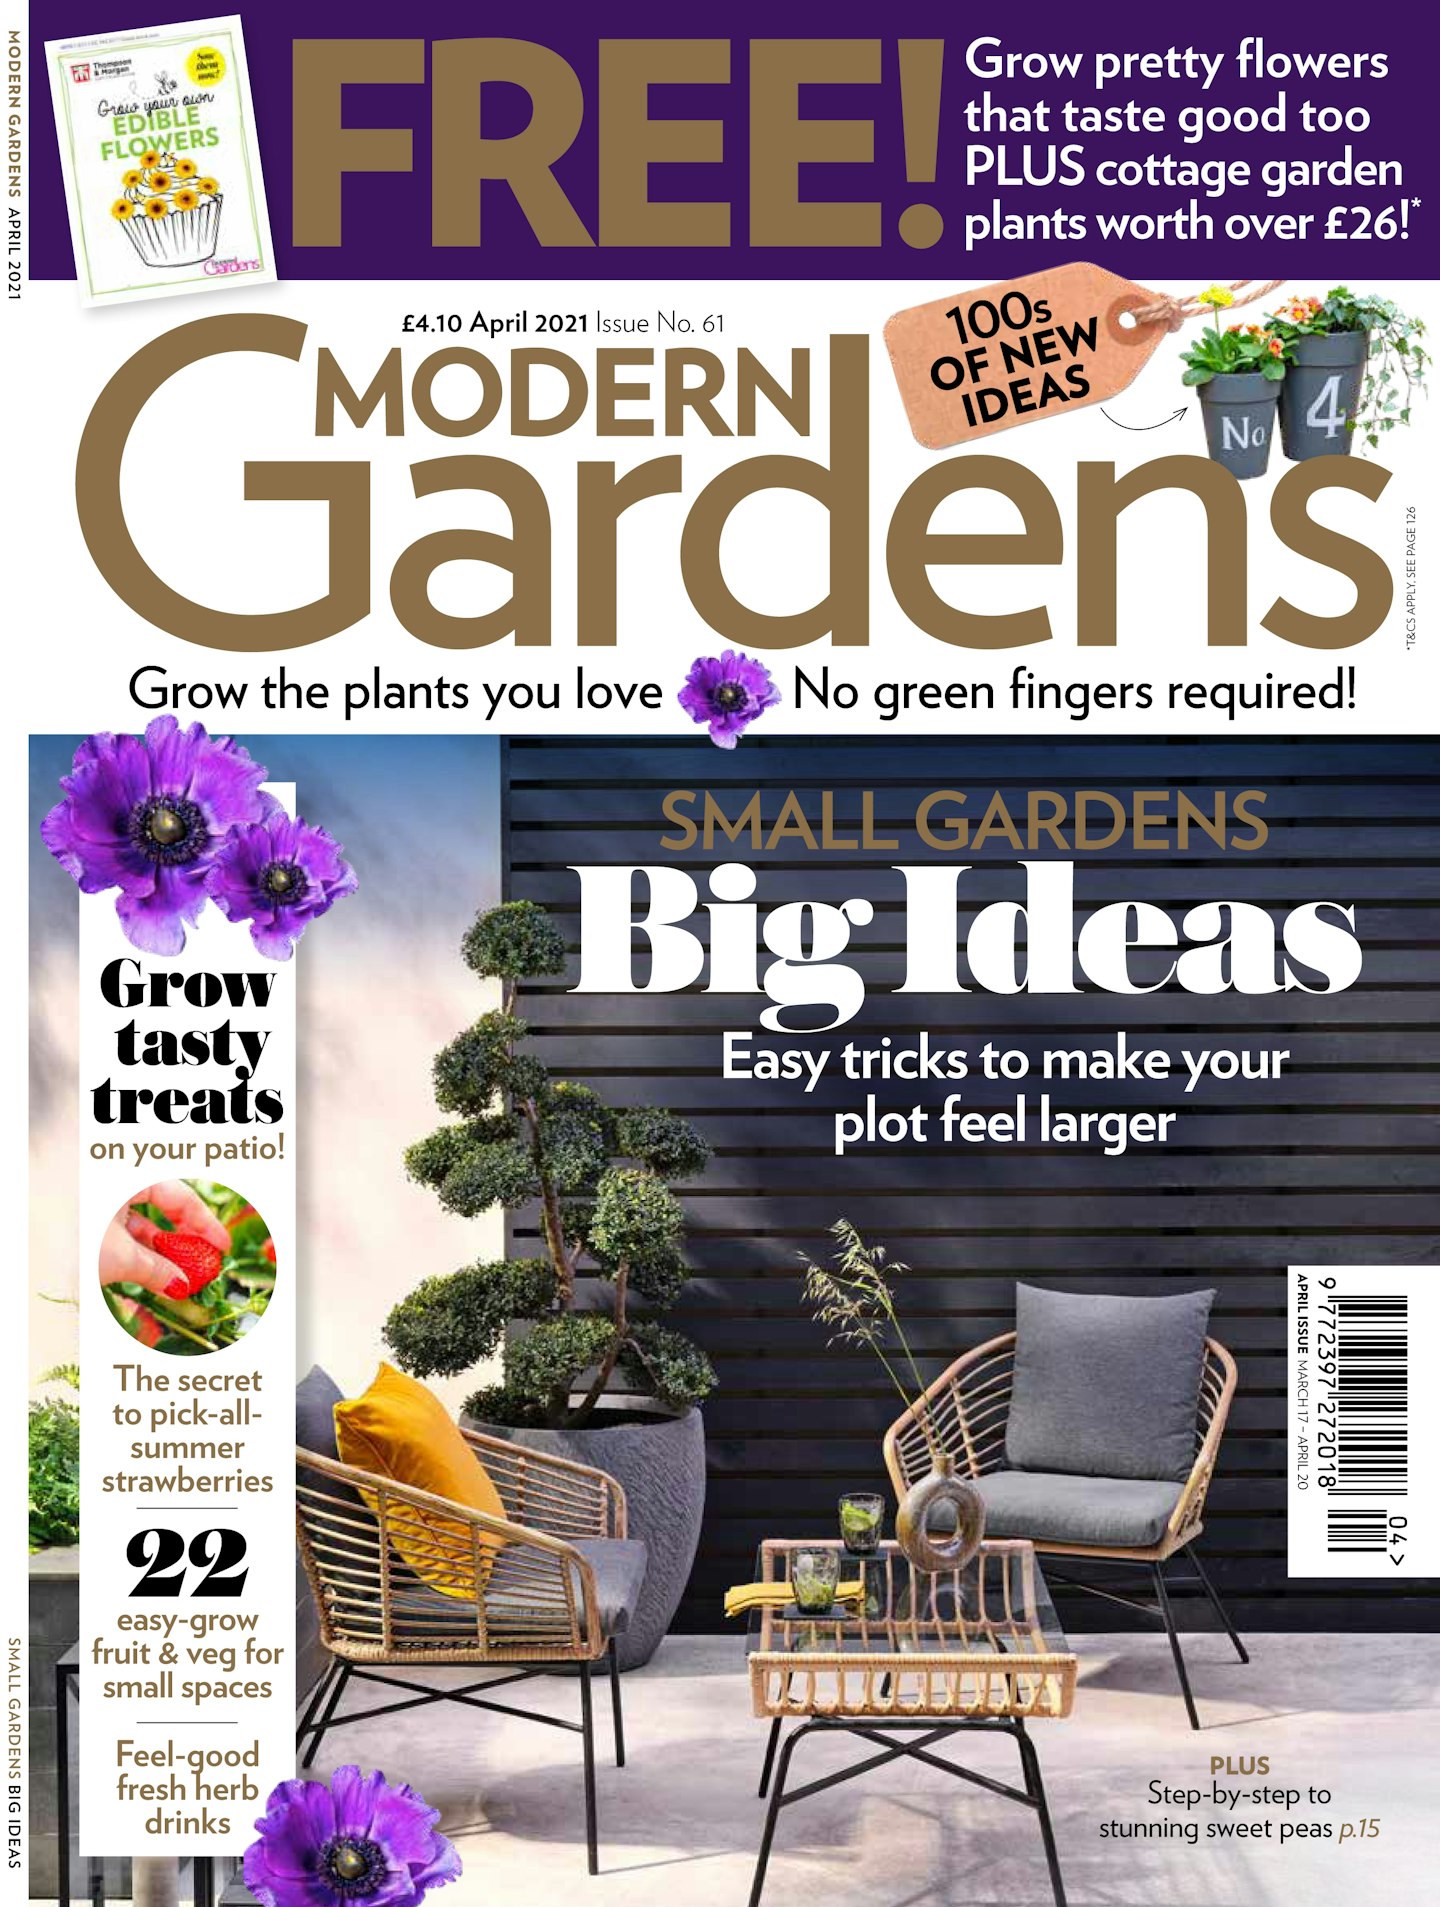 Modern Gardens April 21 issue